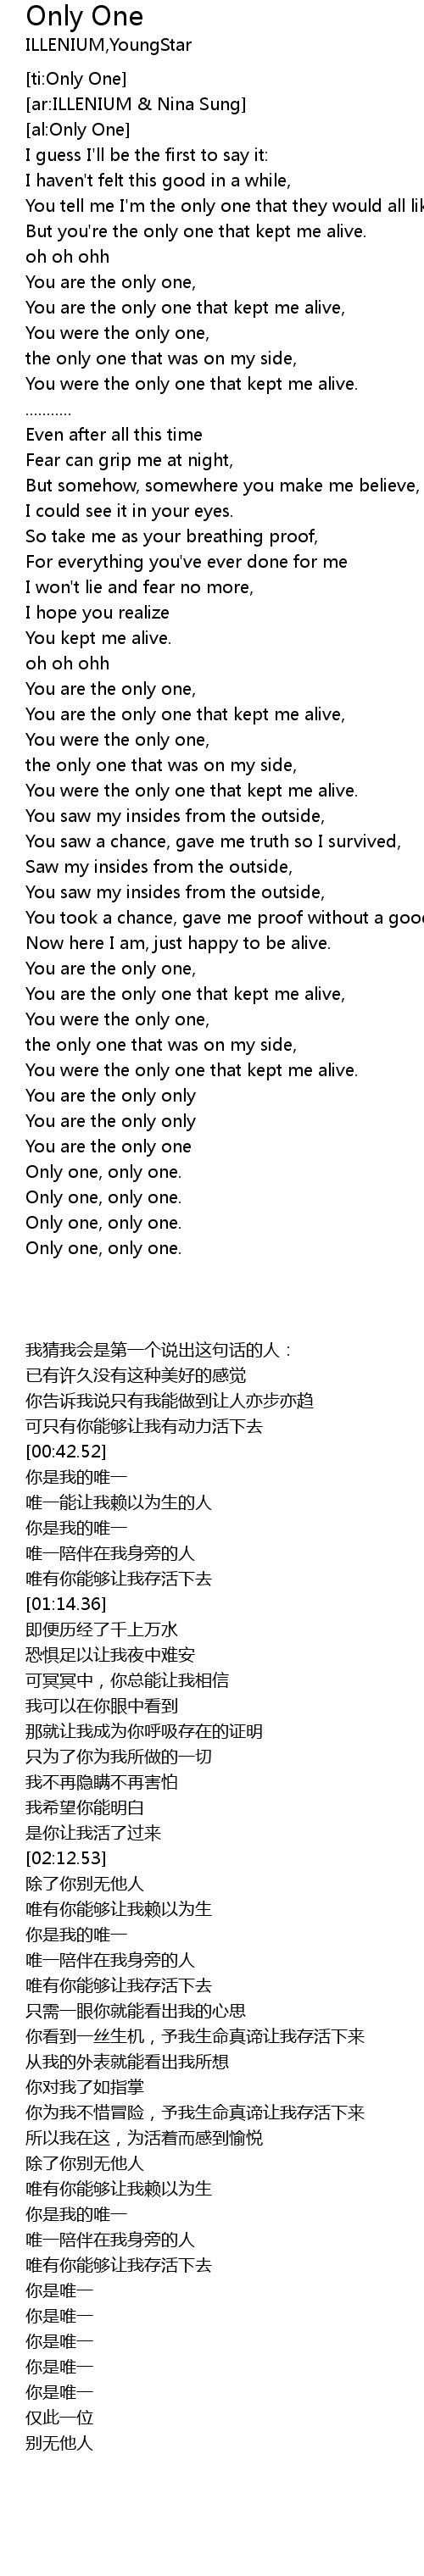 Onlyfans song lyrics